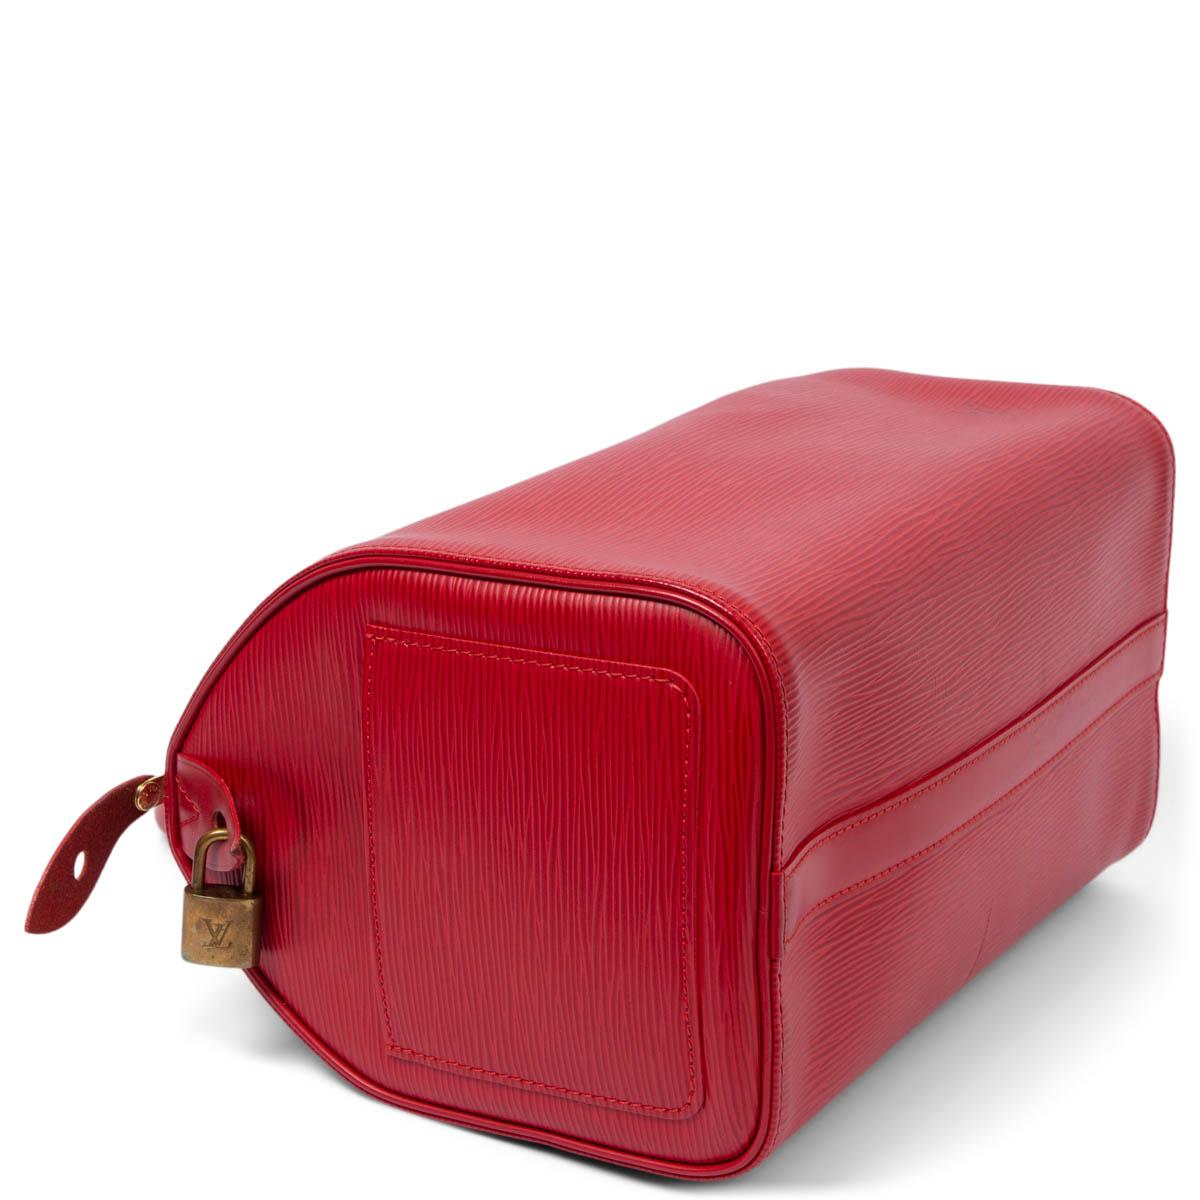 Women's LOUIS VUITTON red Rouge Epi leather SPEEDY 25 Bag